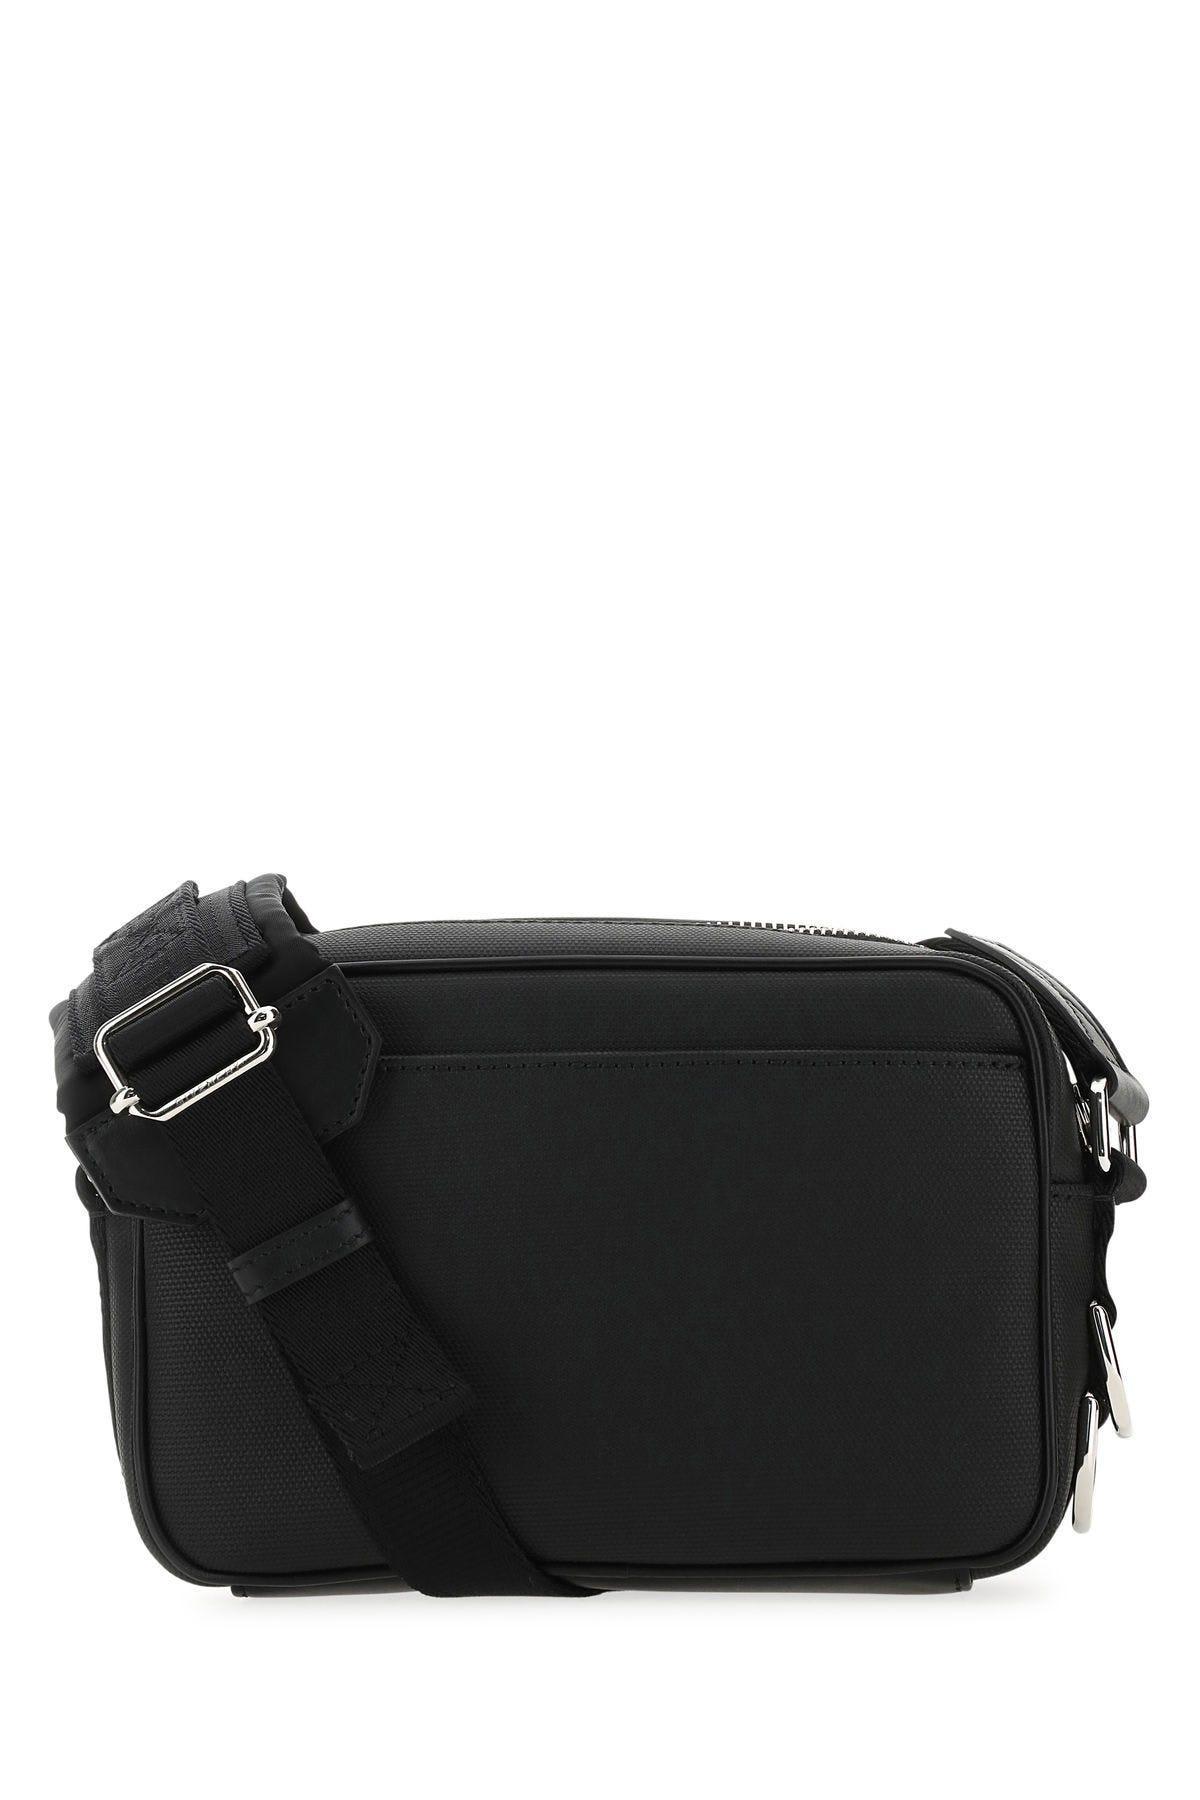 Givenchy Black Canvas G-essentials Crossbody Bag for Men | Lyst